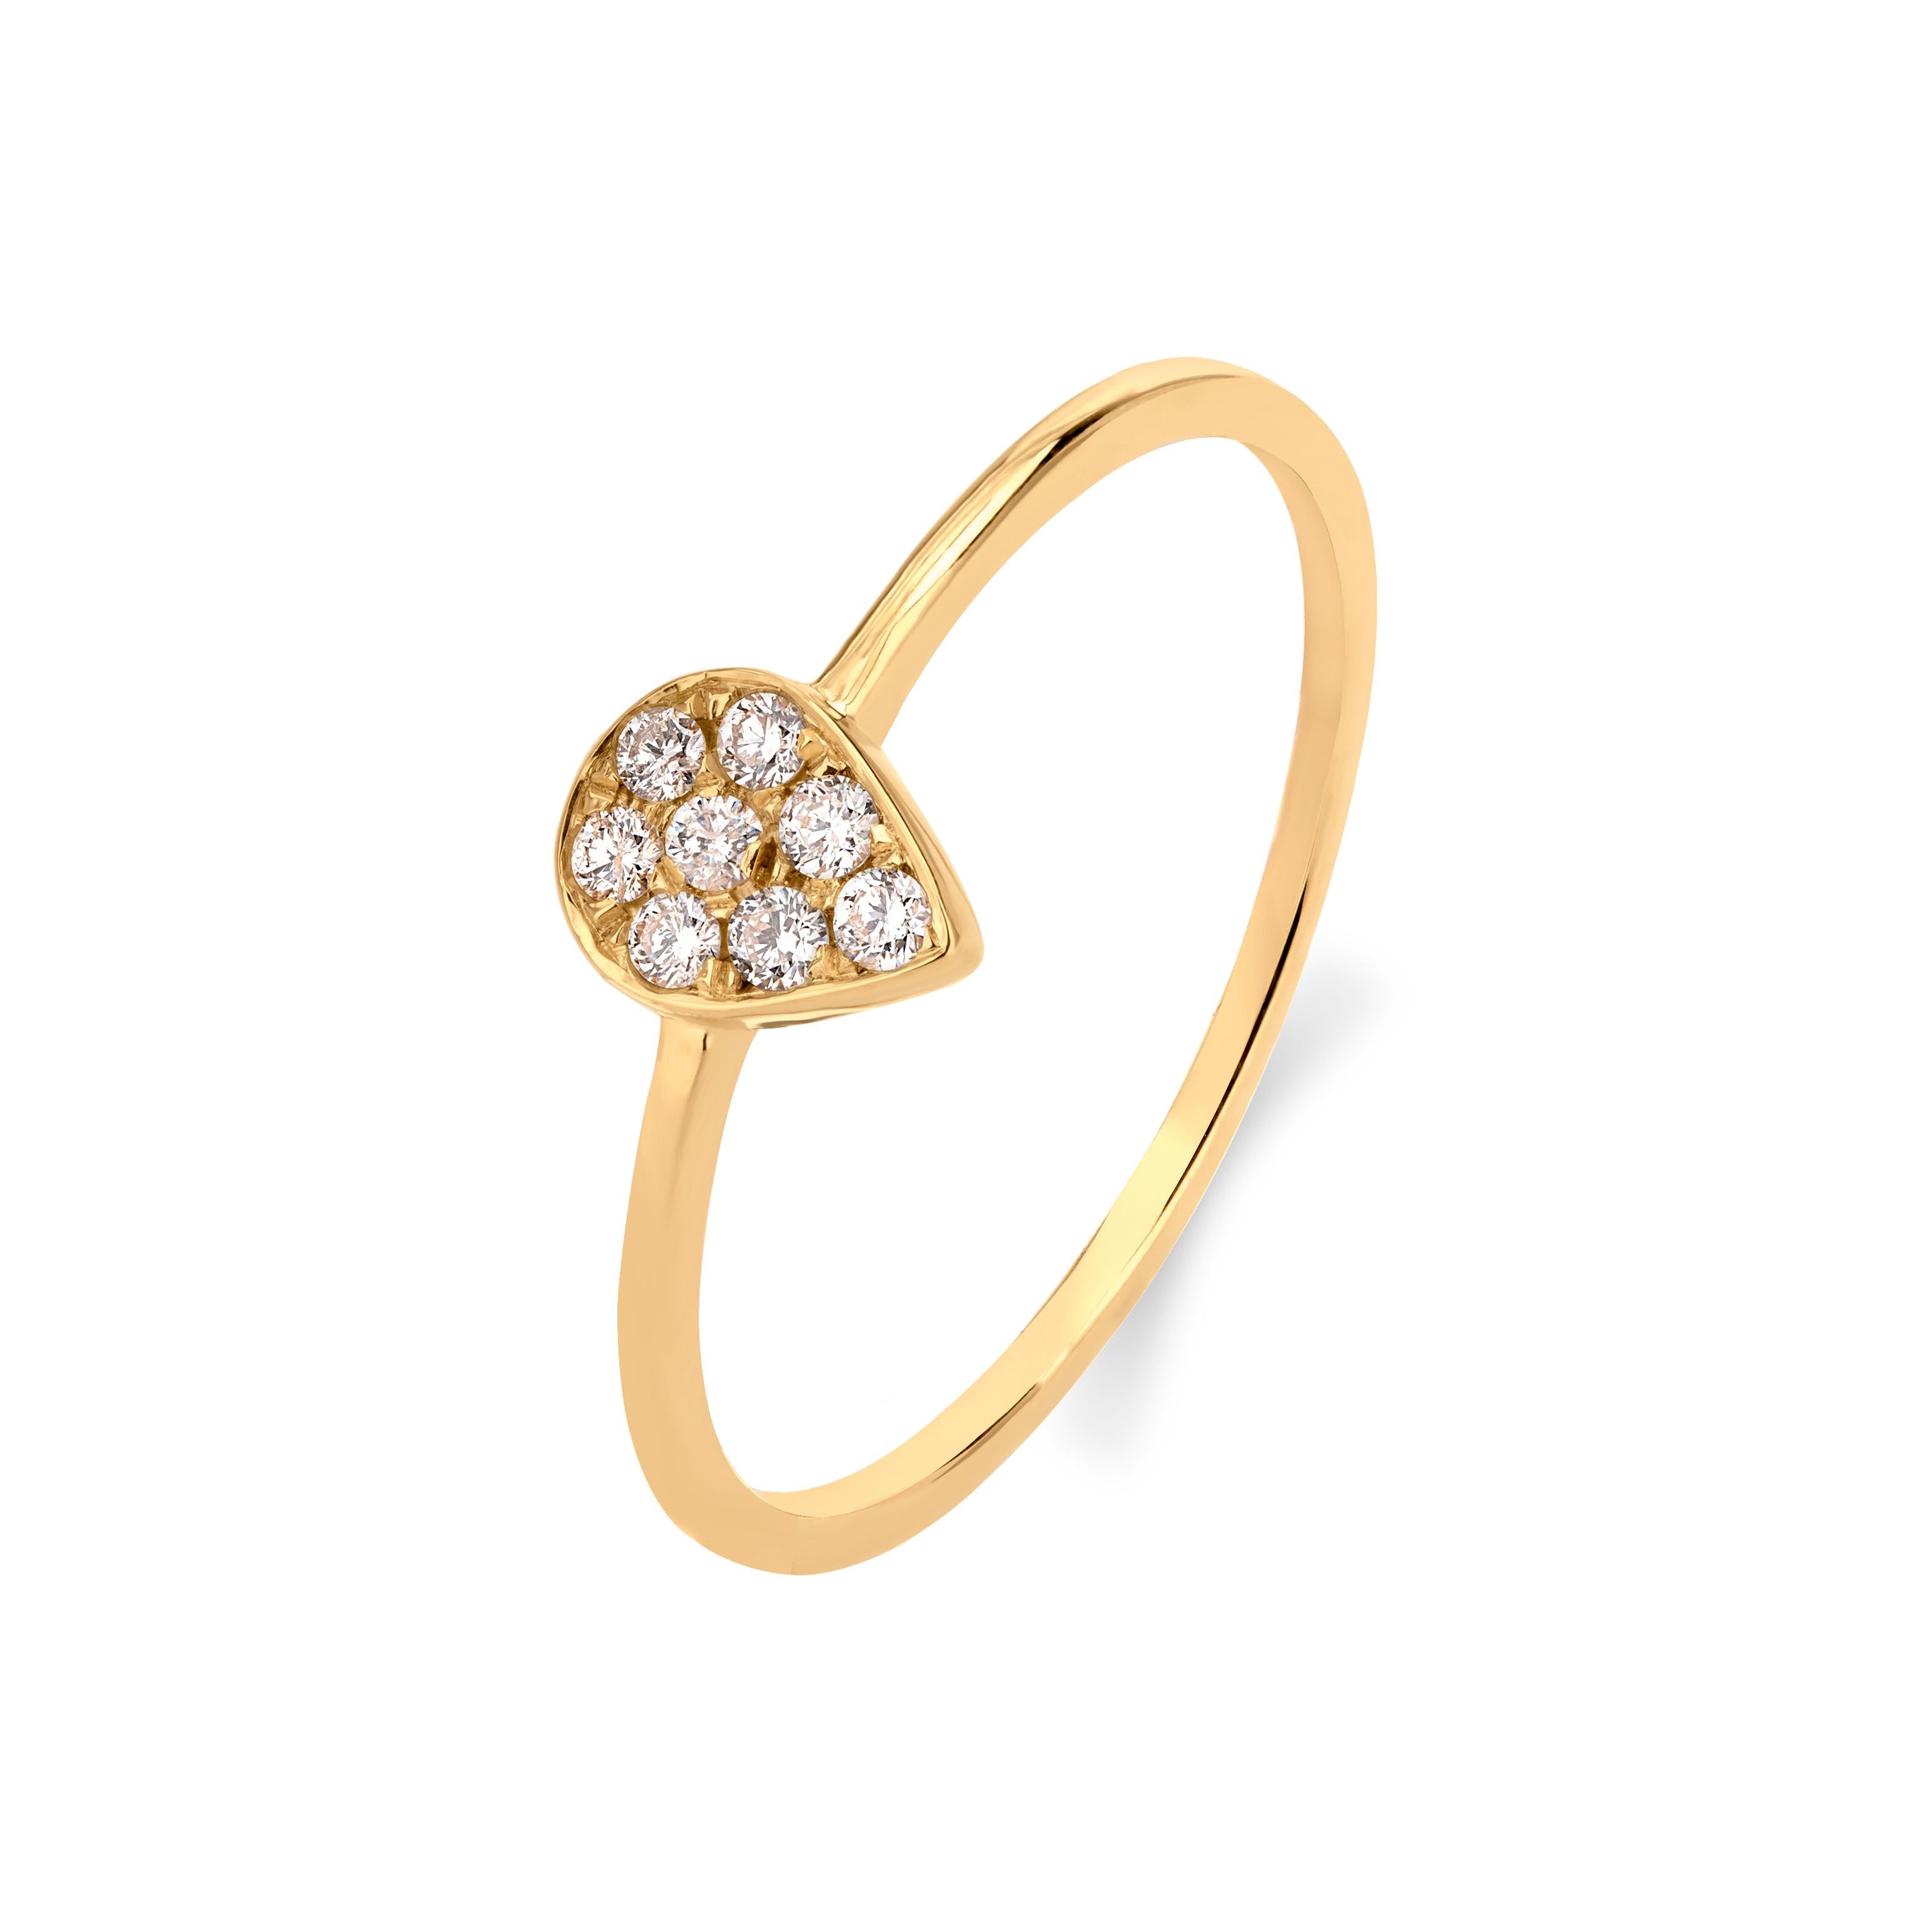 Contemporary Diamond Teardrop Ring in 18k Yellow Gold